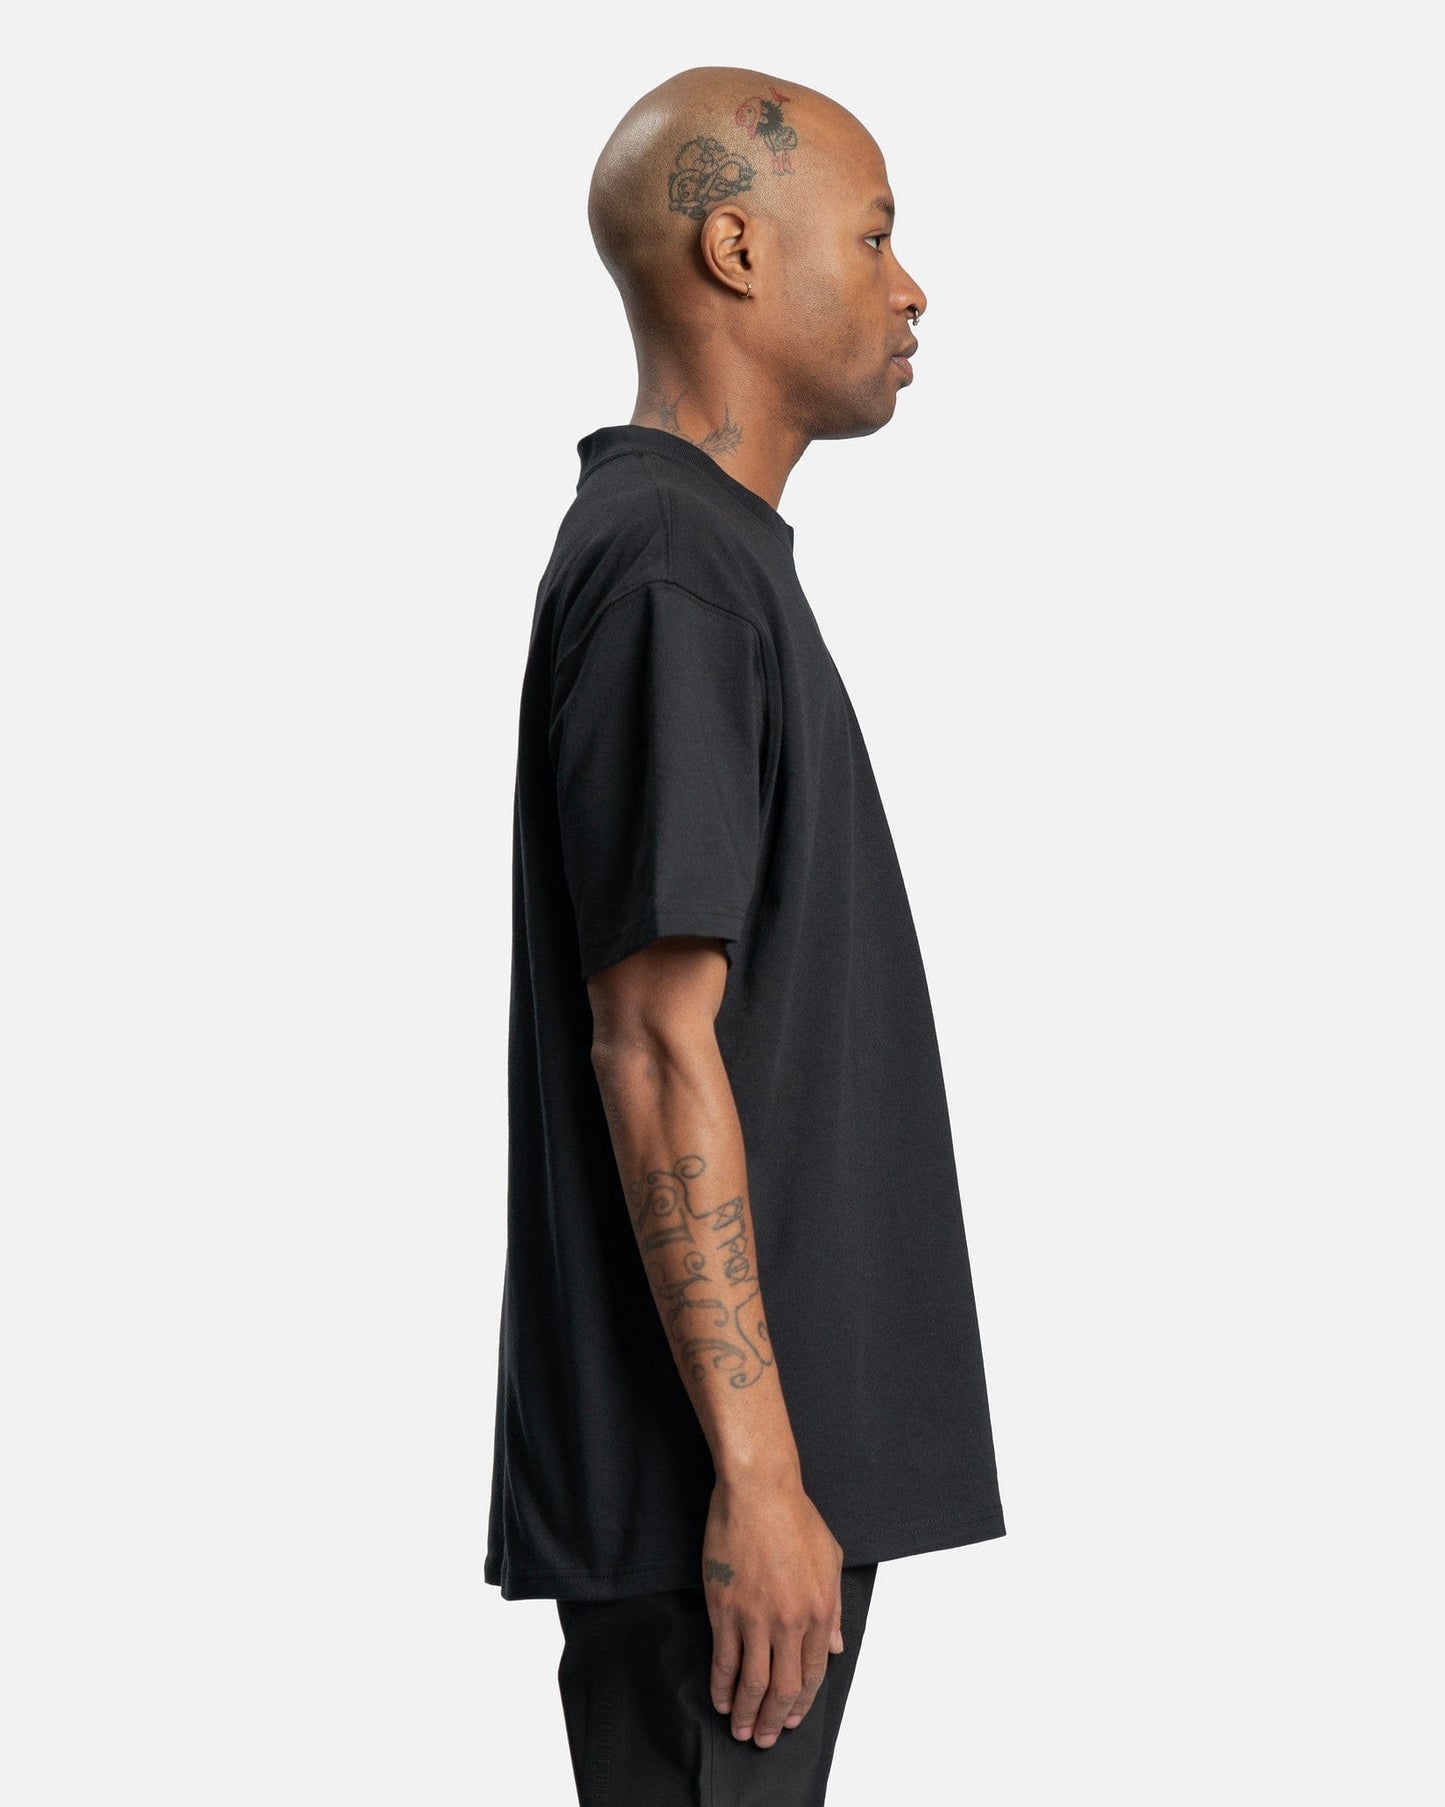 Nike Men's T-Shirts ACG Logo T-Shirt in Black